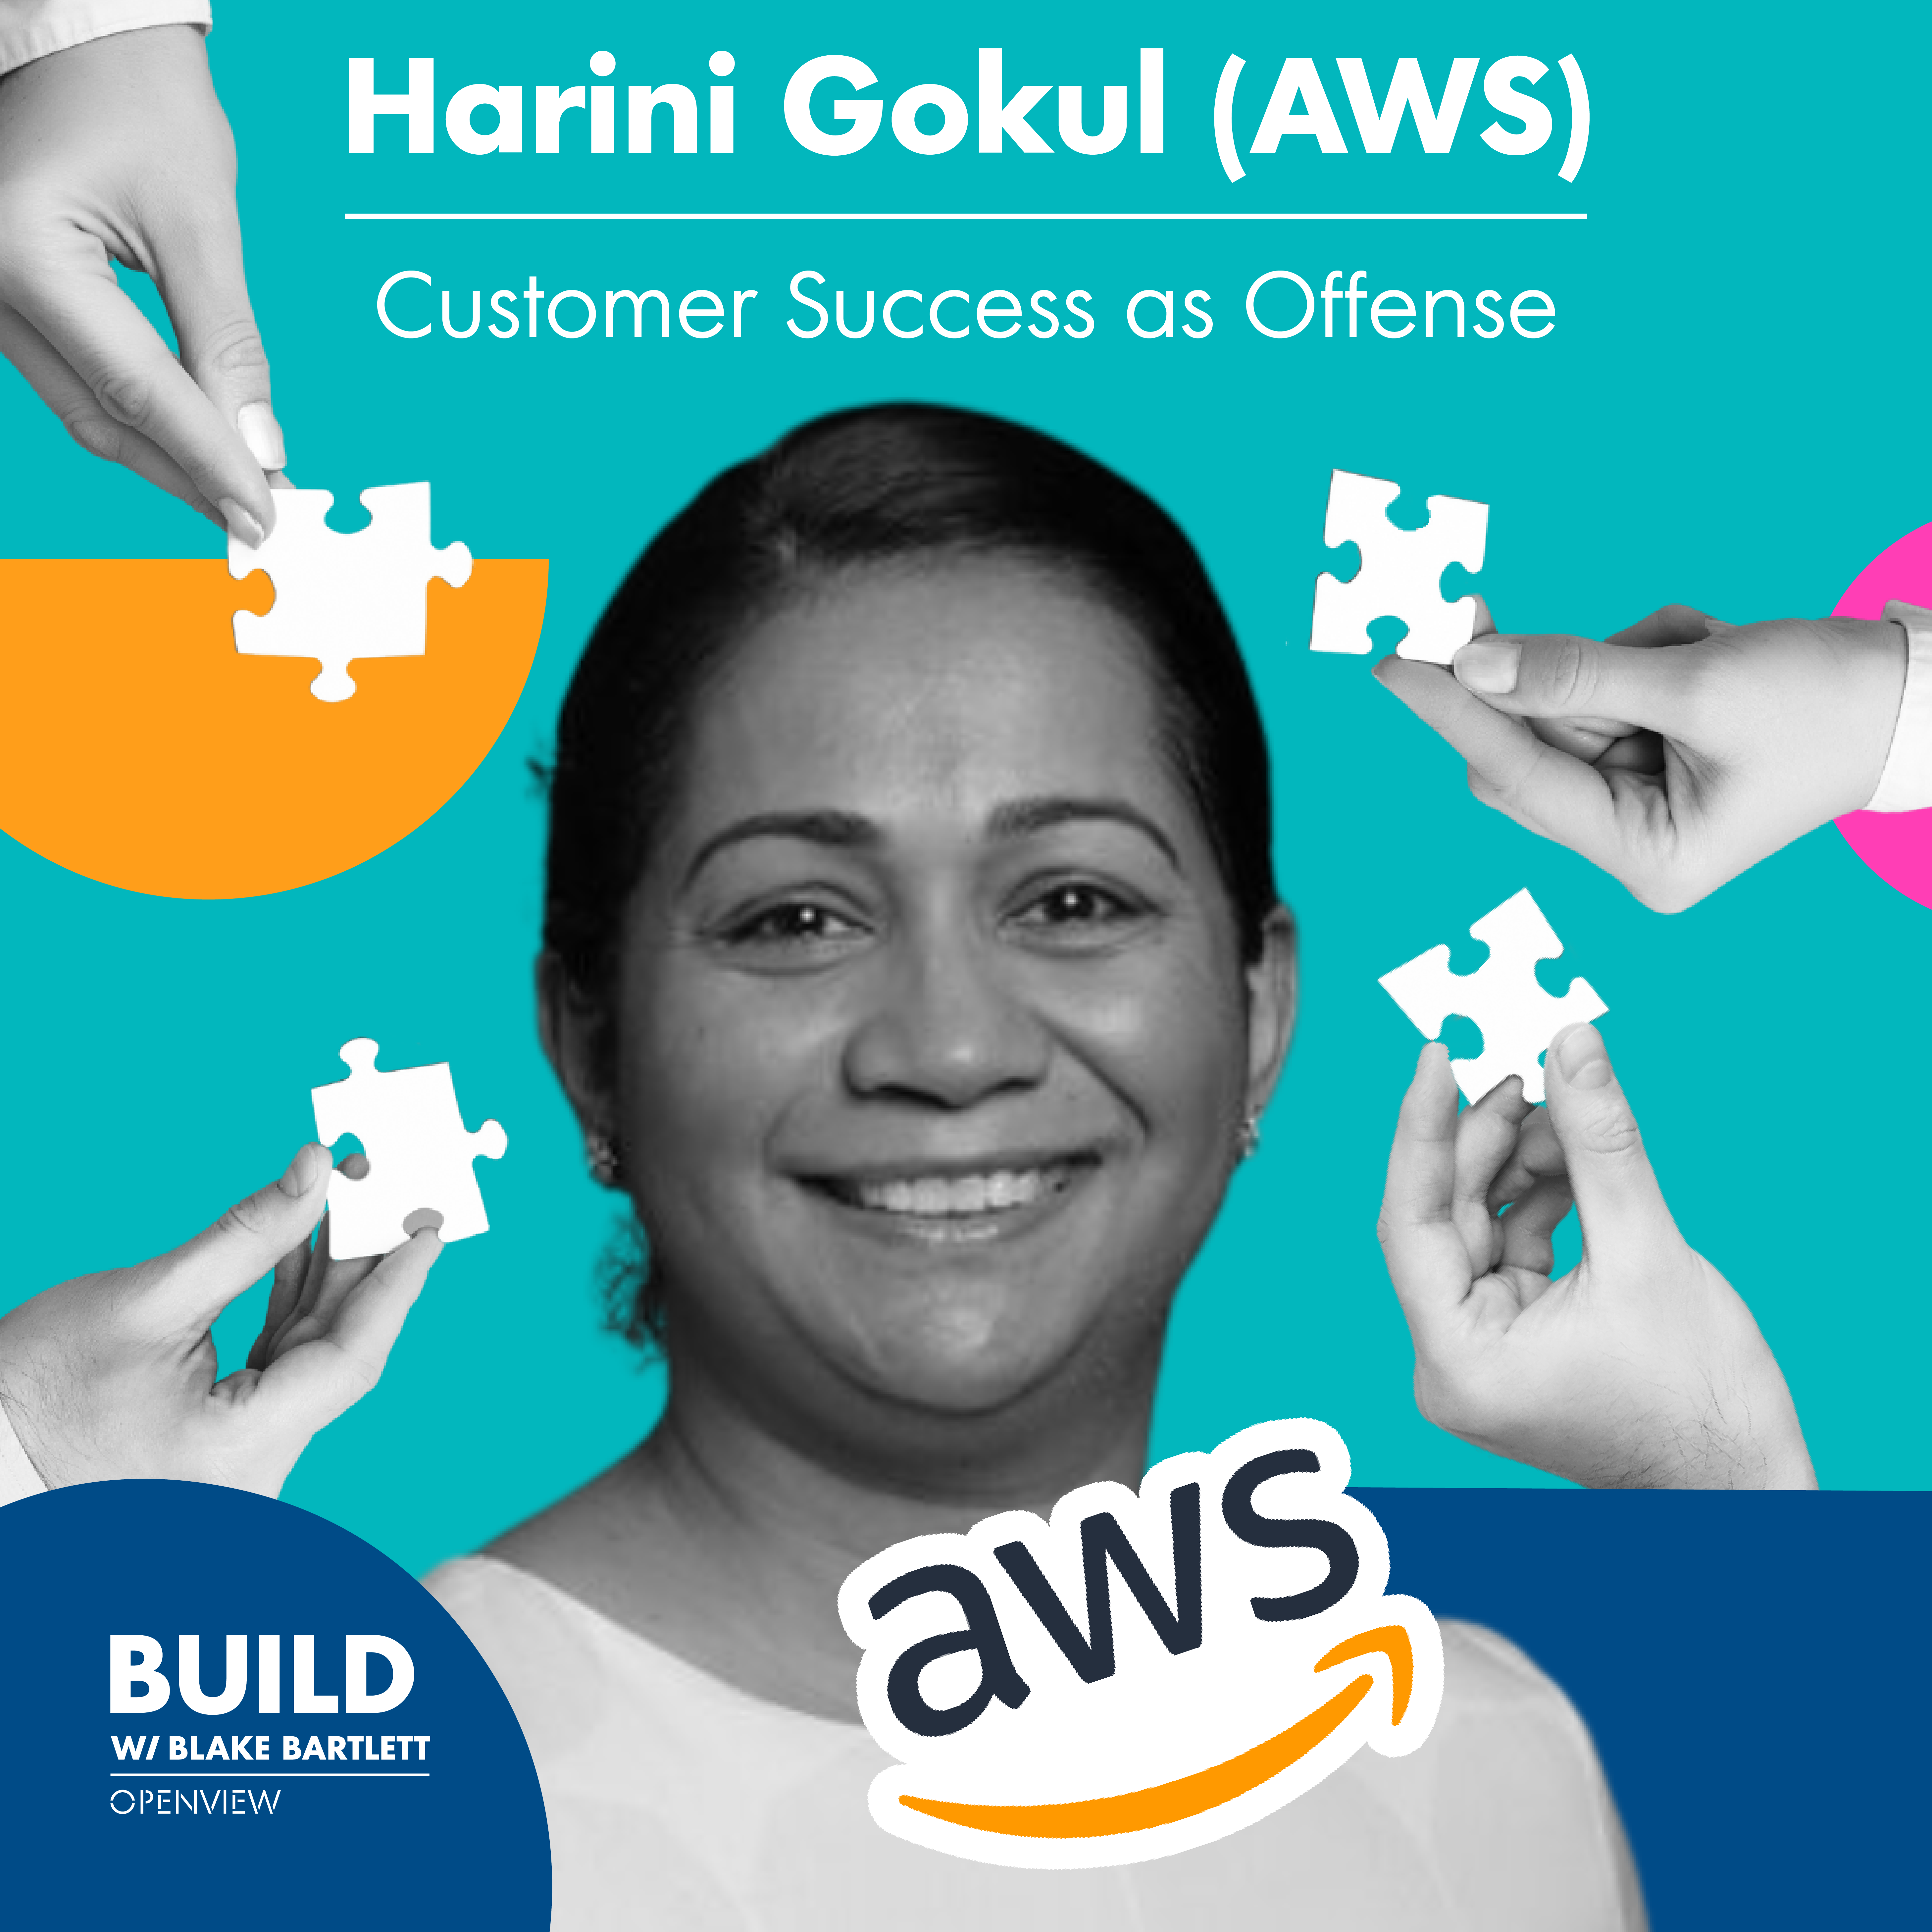 Harini Gokul (AWS) Customer Success as Offense